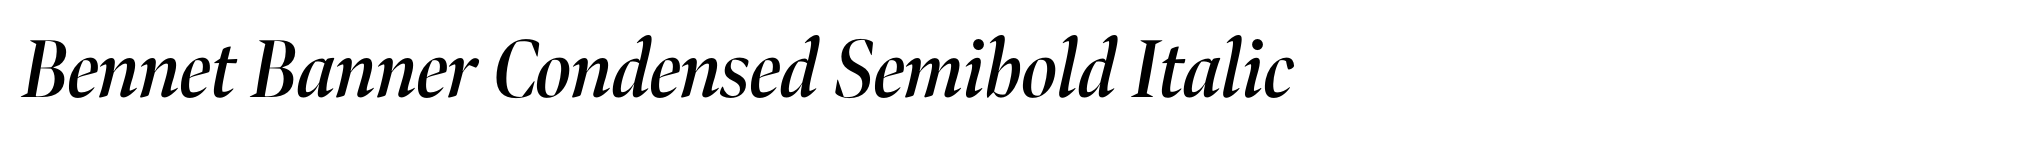 Bennet Banner Condensed Semibold Italic image